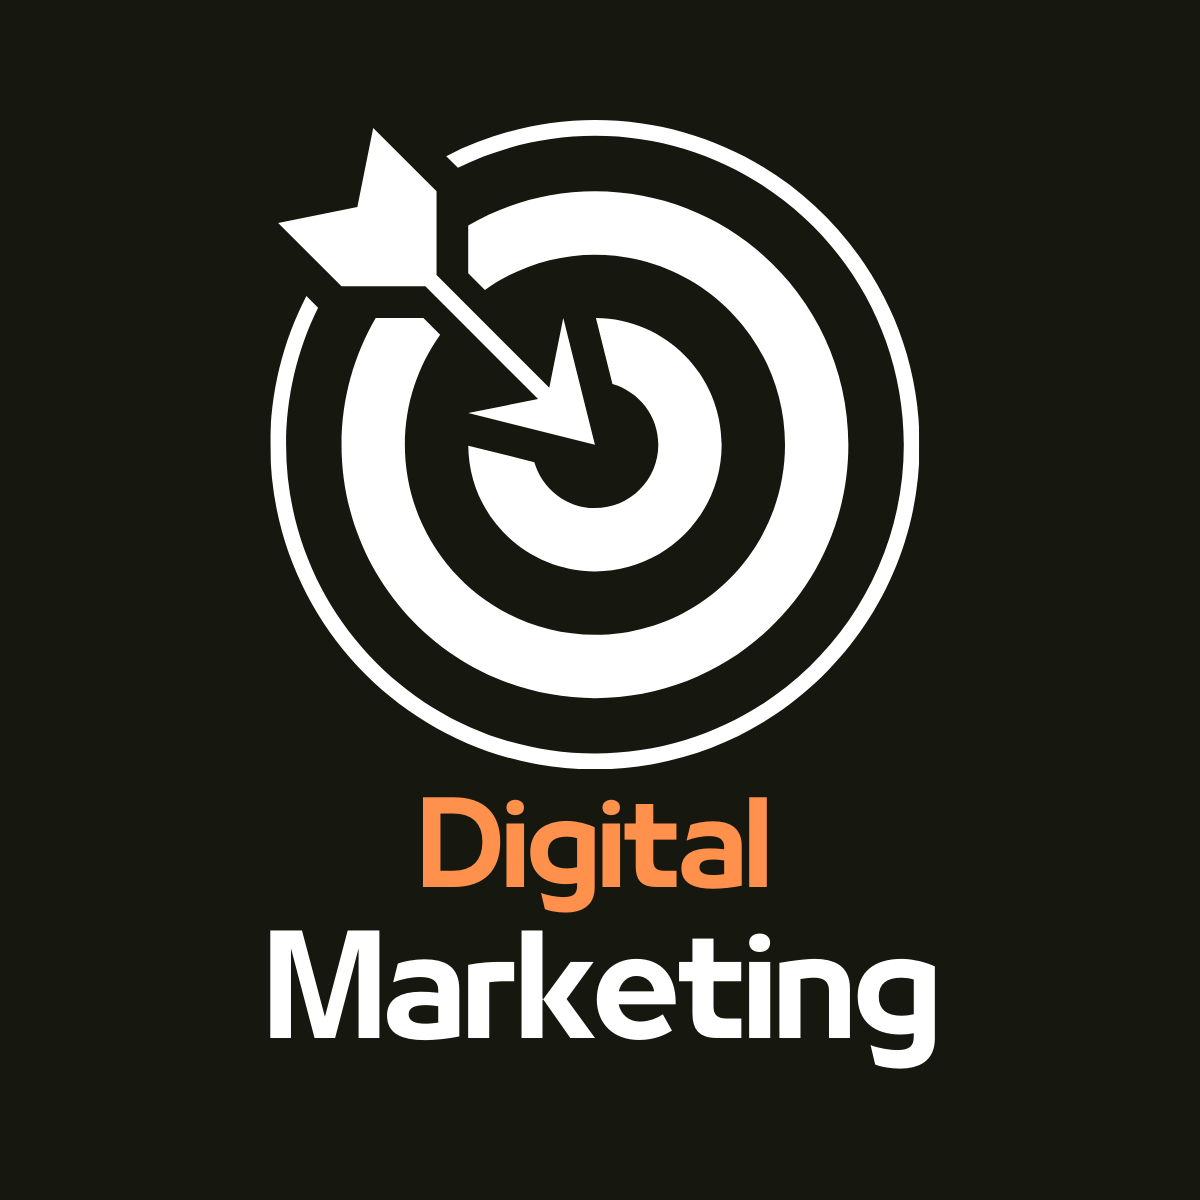 Digital Marketing Service Provider in India